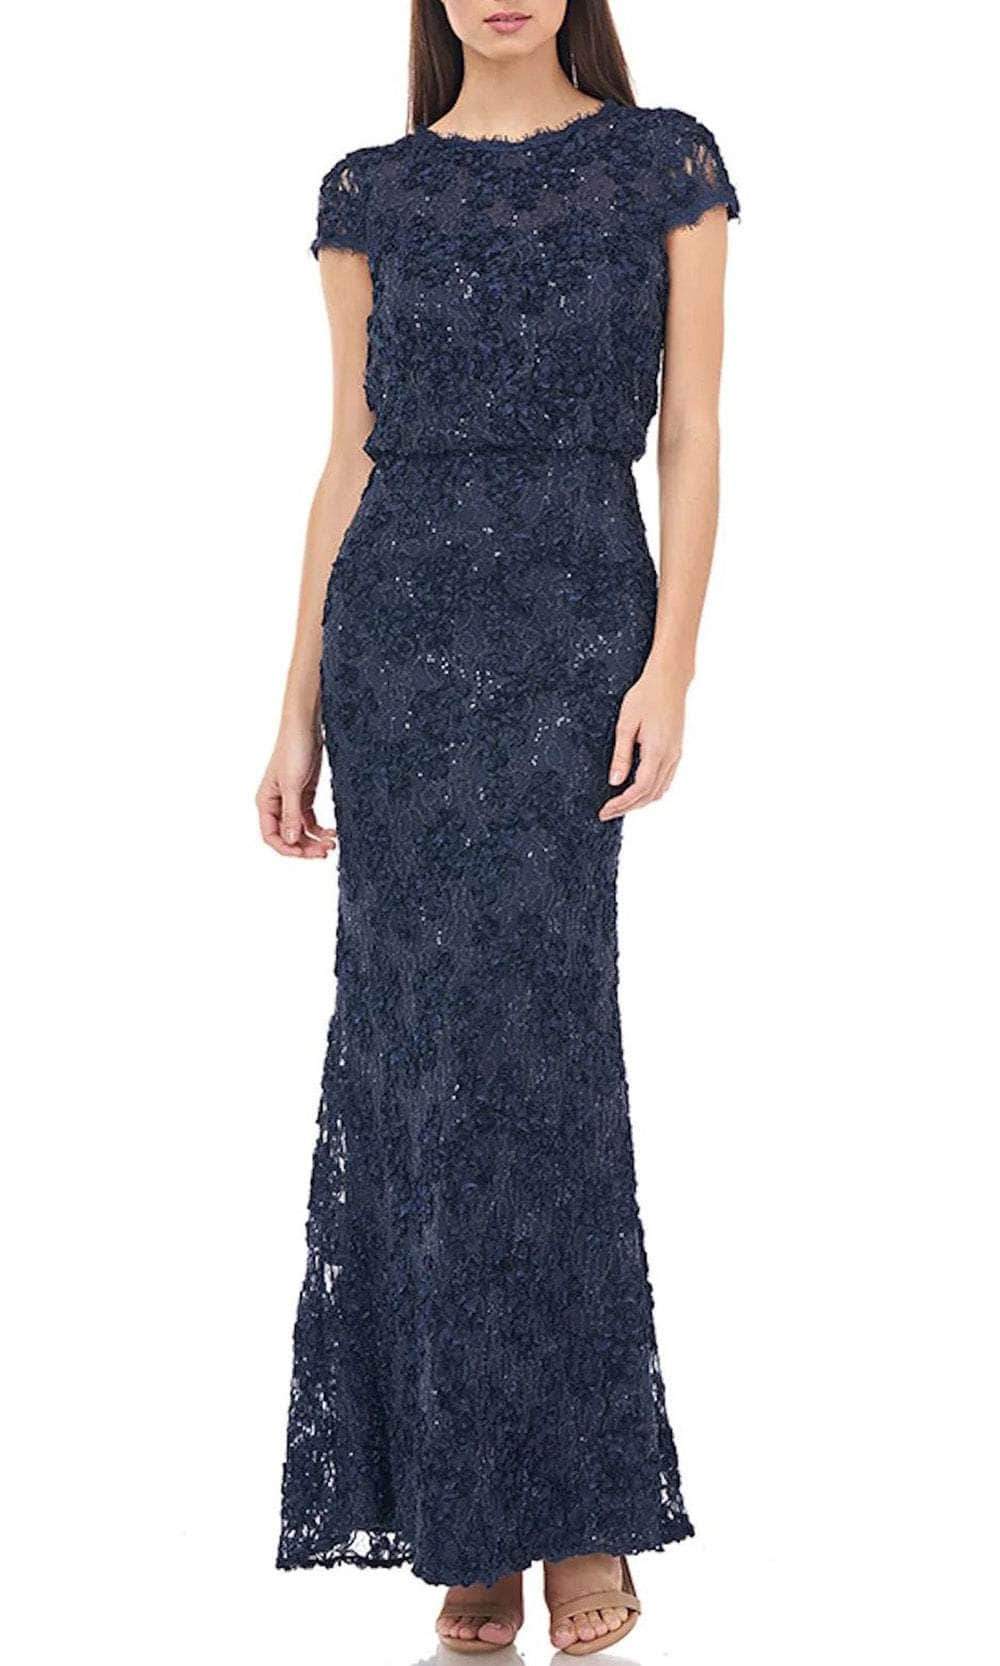 JS Collections 866657 - Blouson Sequin Lace Dress Mother of the Bride Dresses 4 / Navy